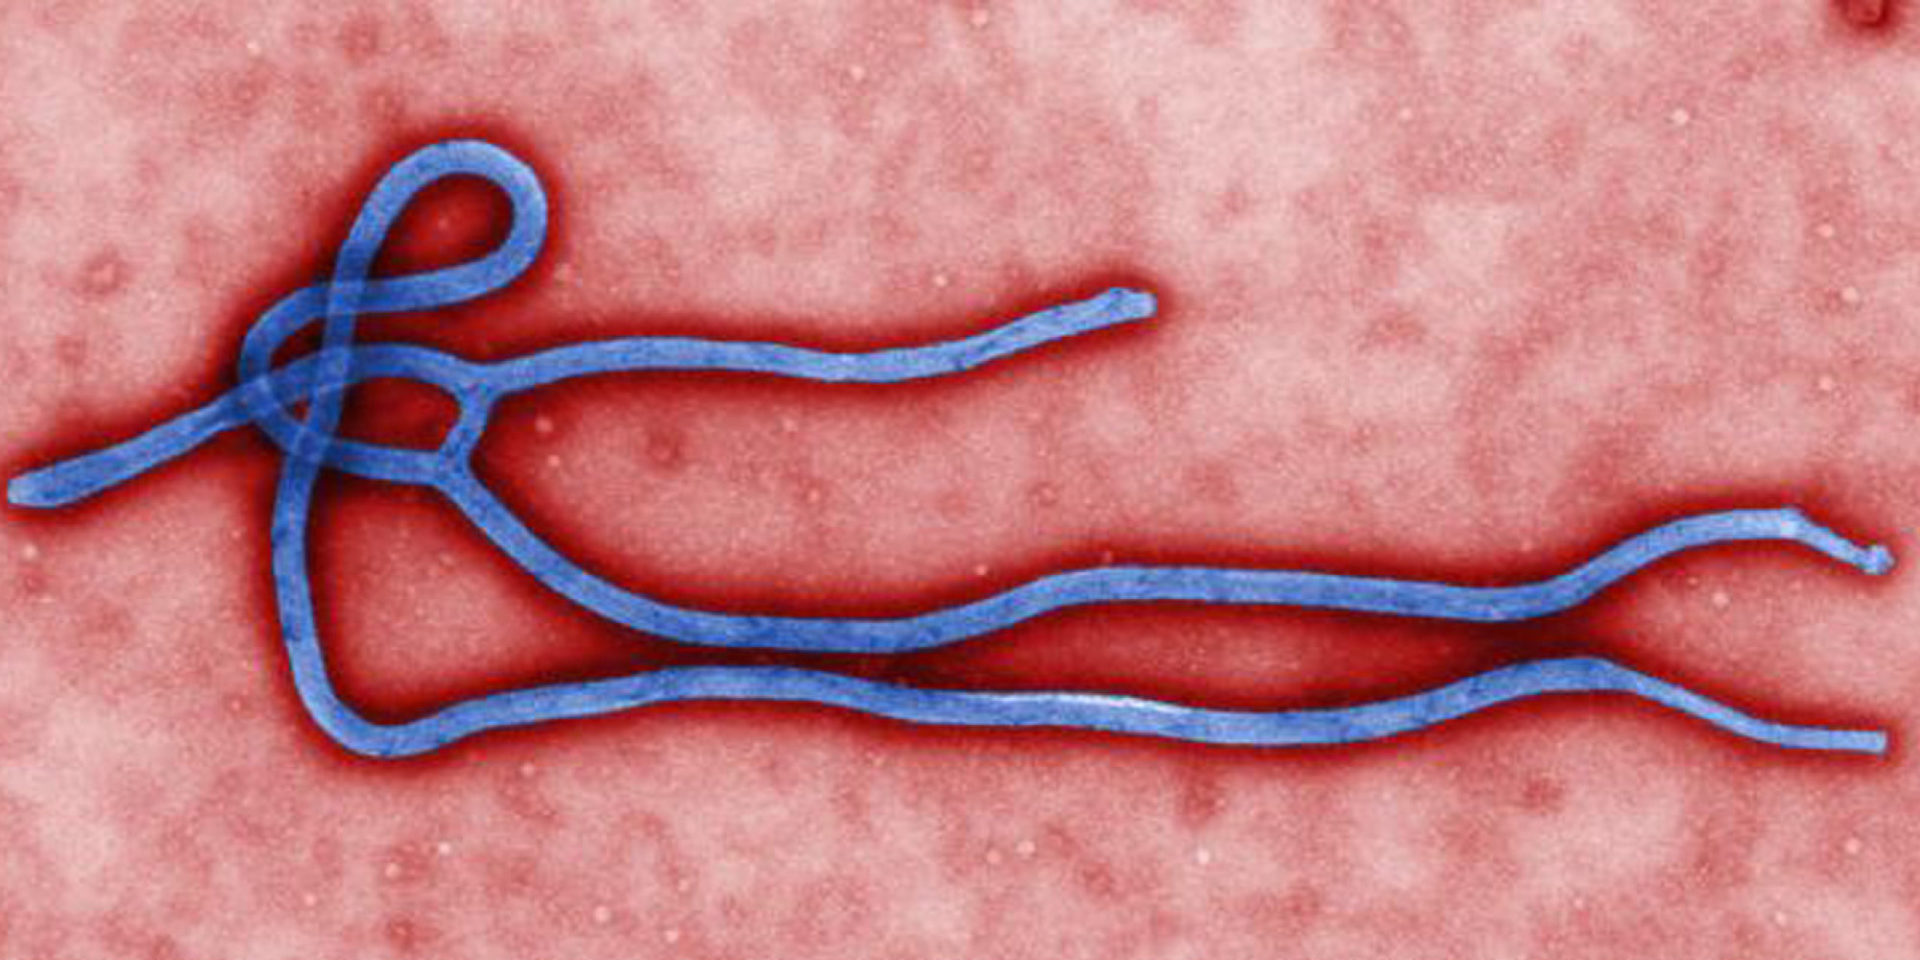 Fight Ebola